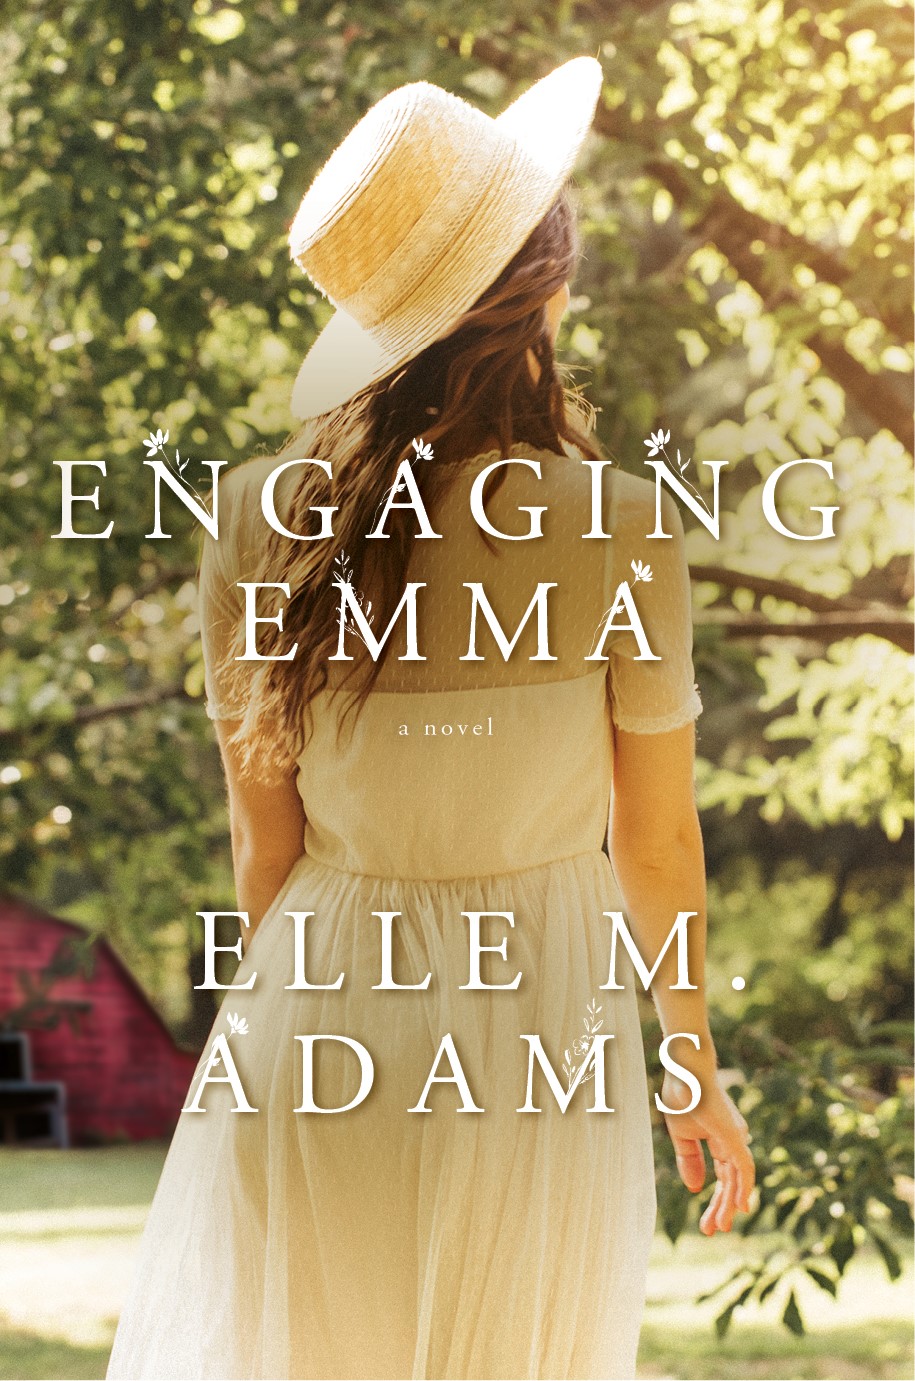 Engaging Emma